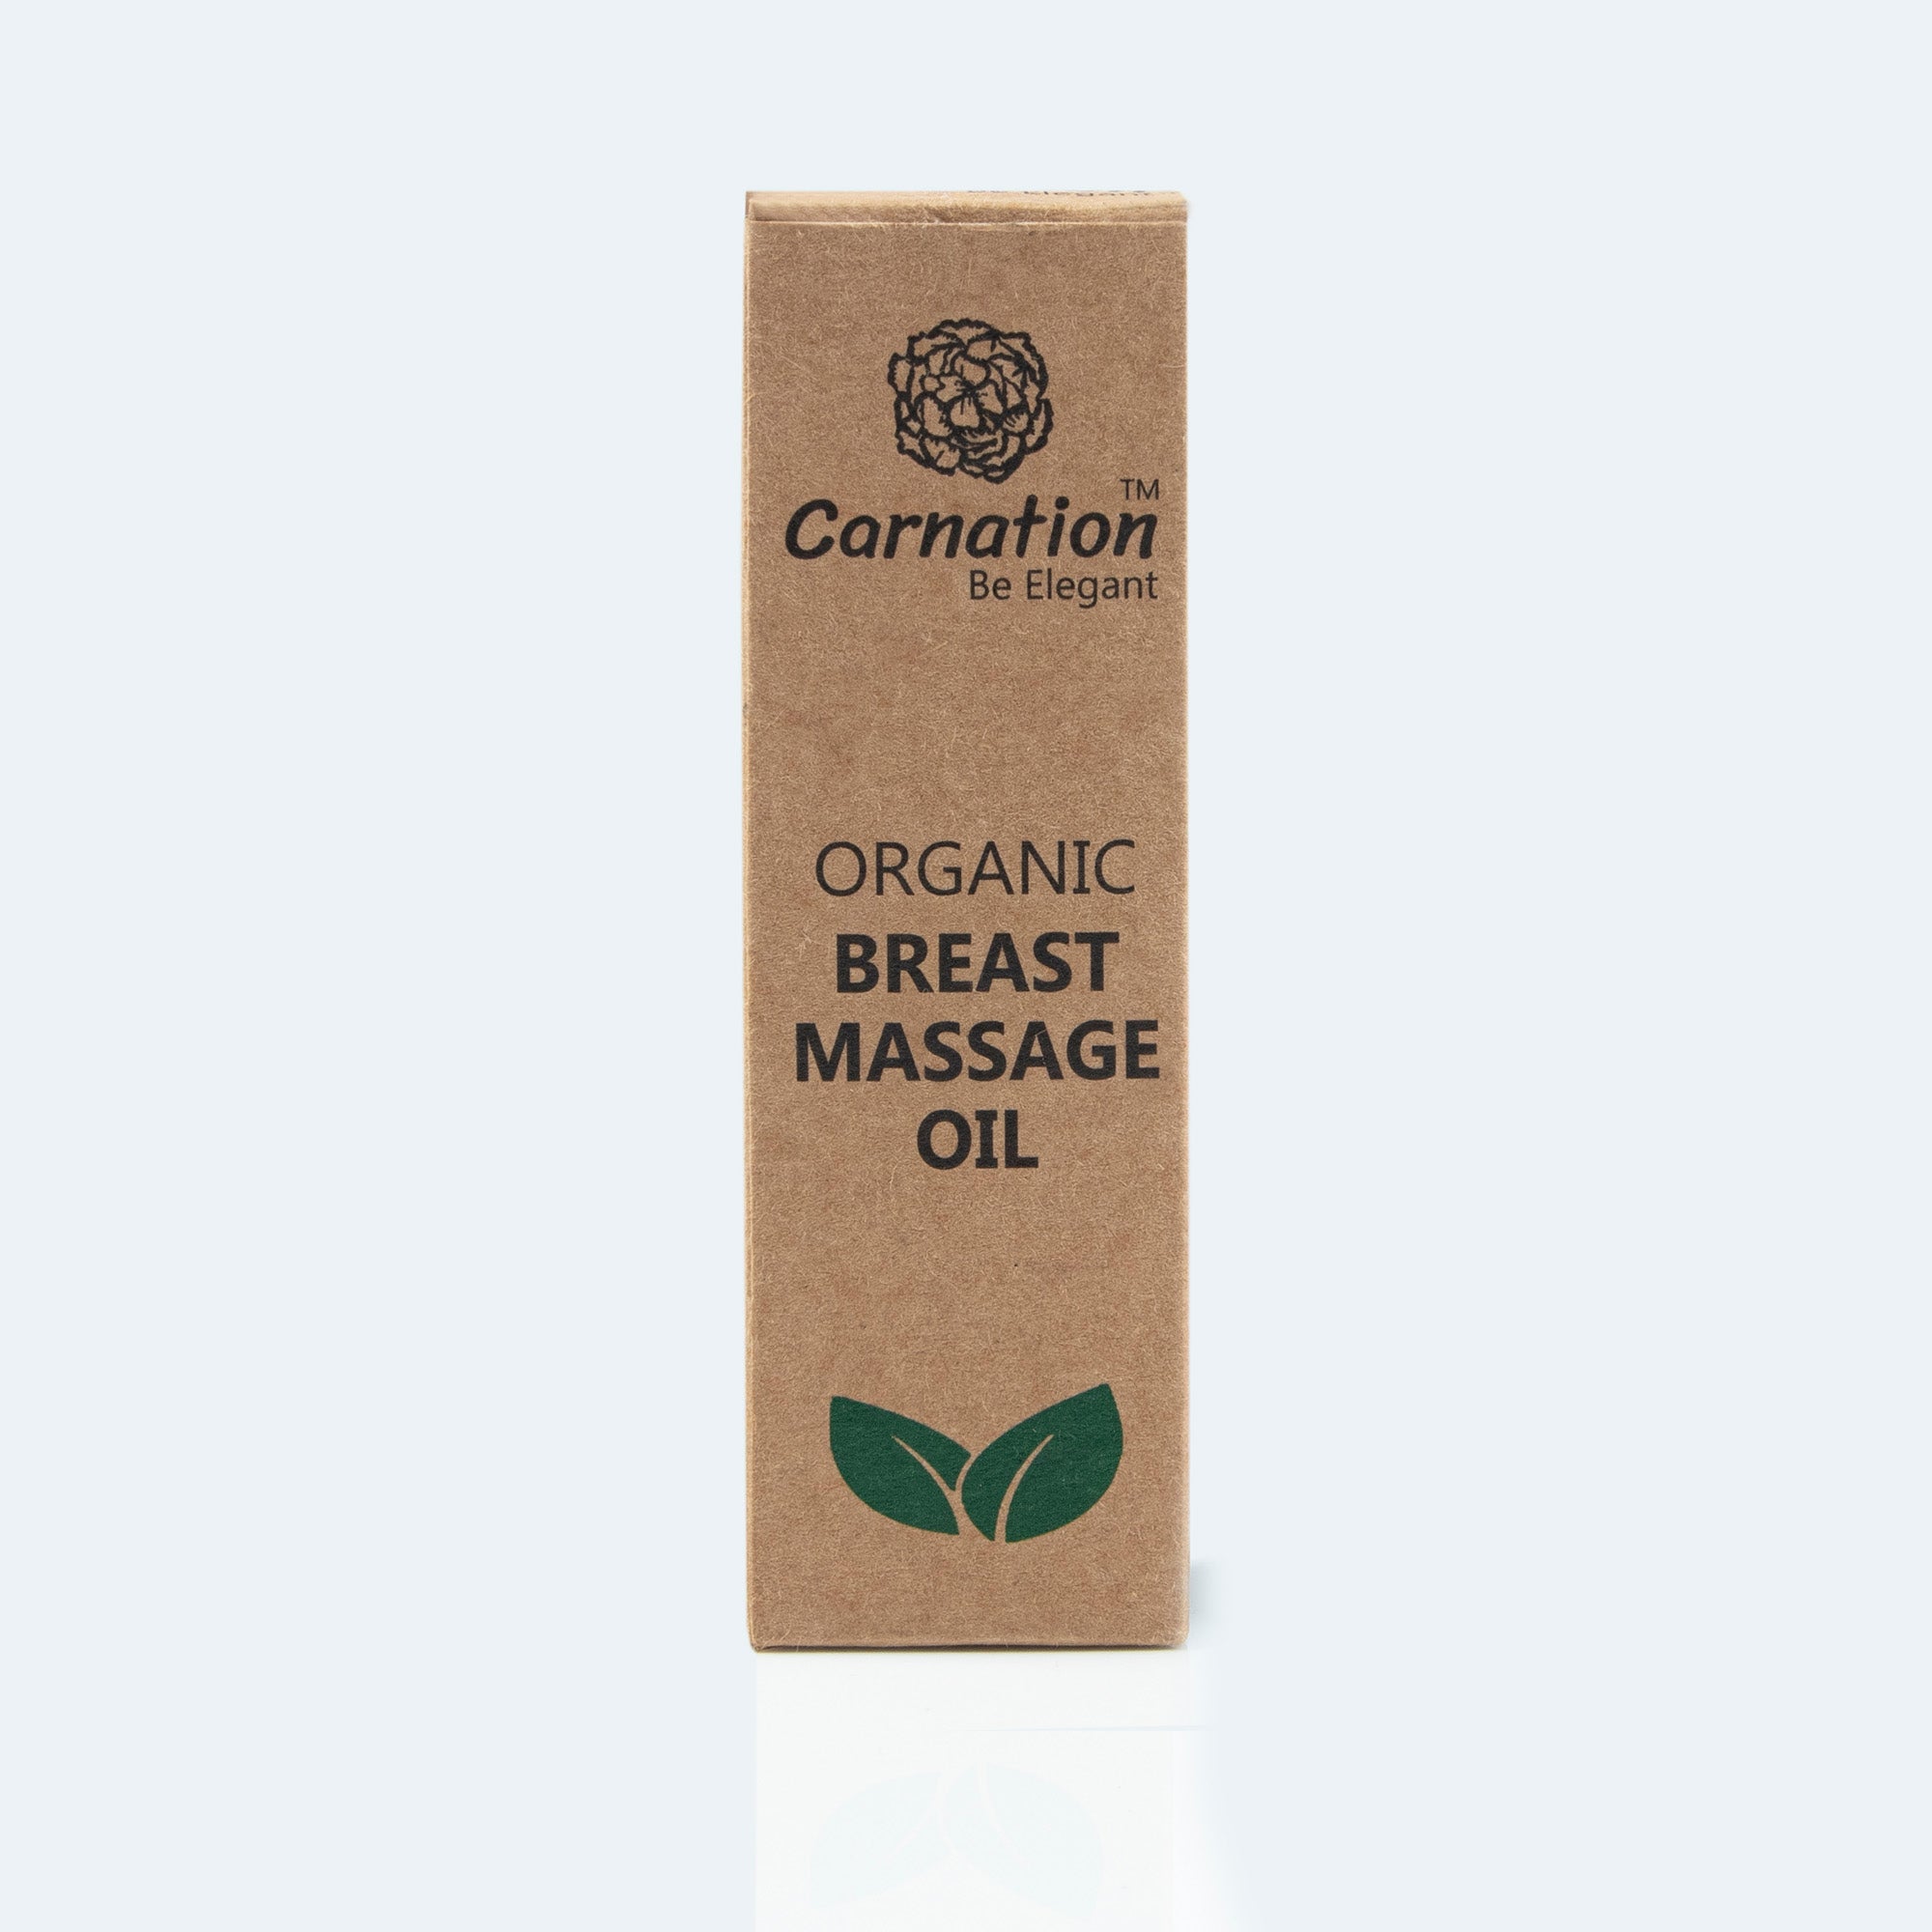 Breast Message oil